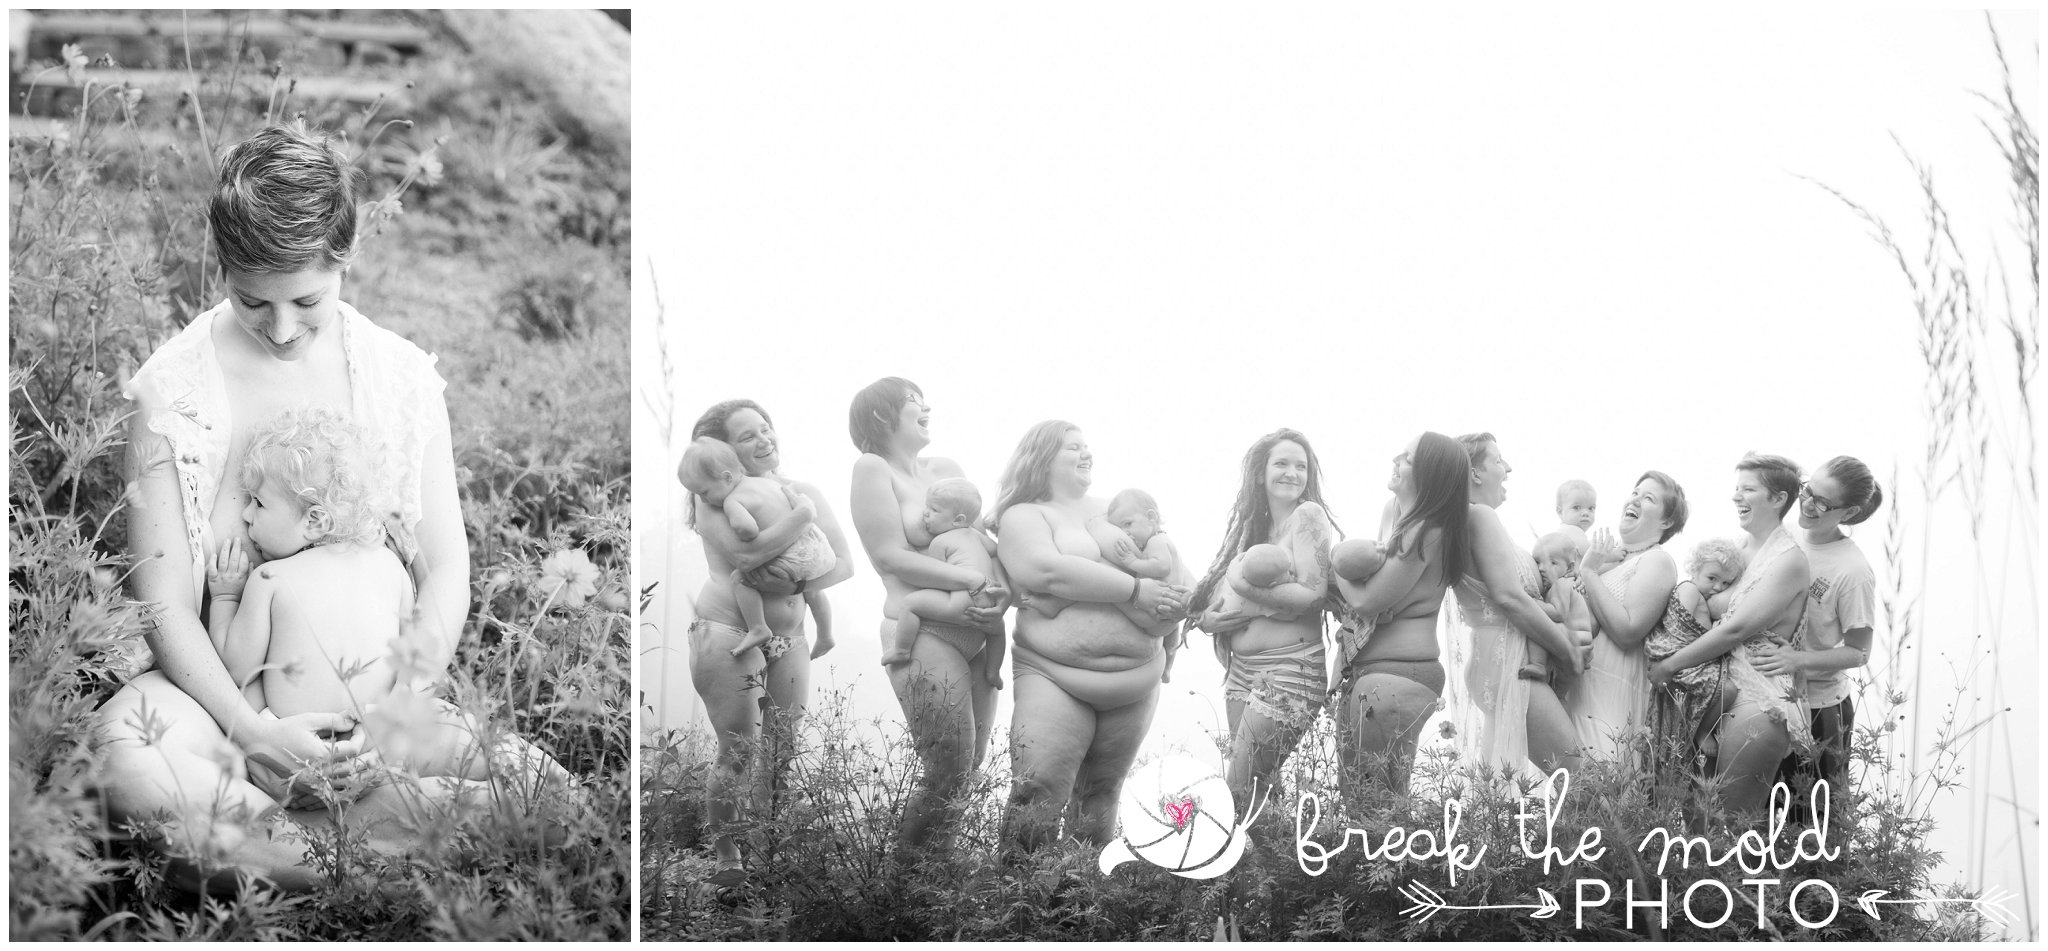 break-the-mold-photo-nursing-breastfeeding-session-womens-beauty-woman-body-nurse-breastfed (7).jpg